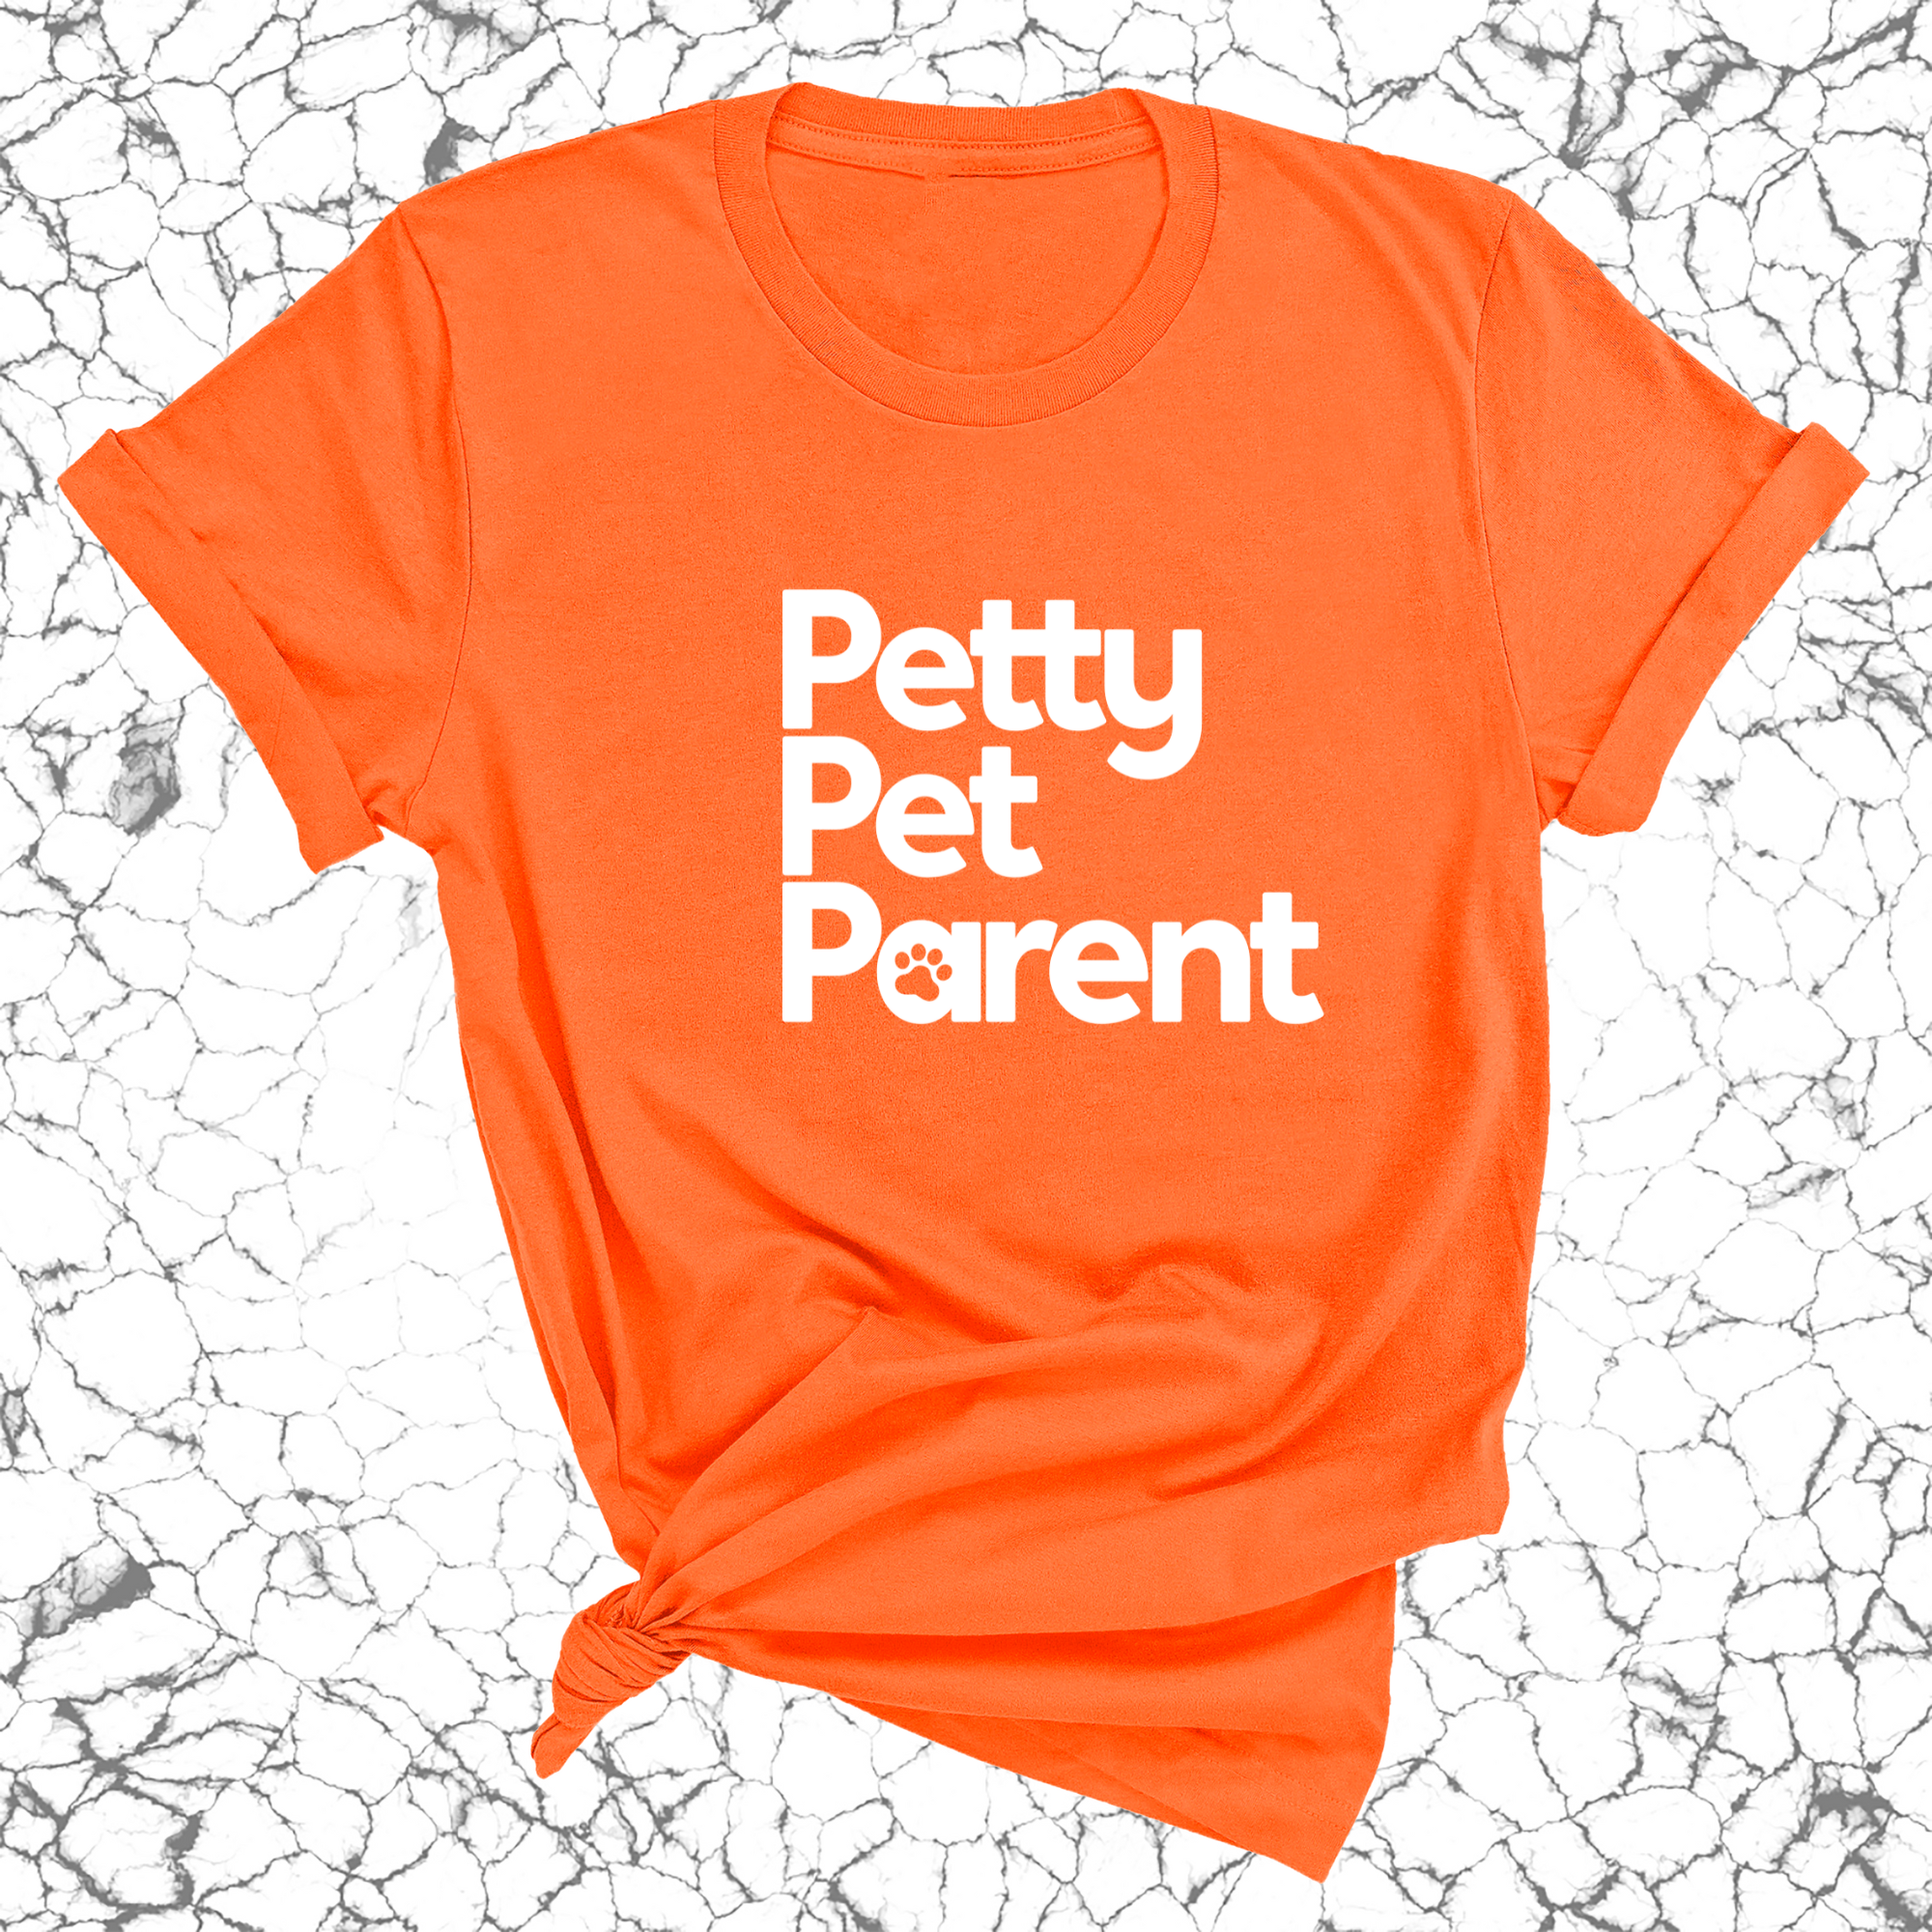 Petty Pet Parent Unisex Tee-T-Shirt-The Original God Ain't Petty But I Am